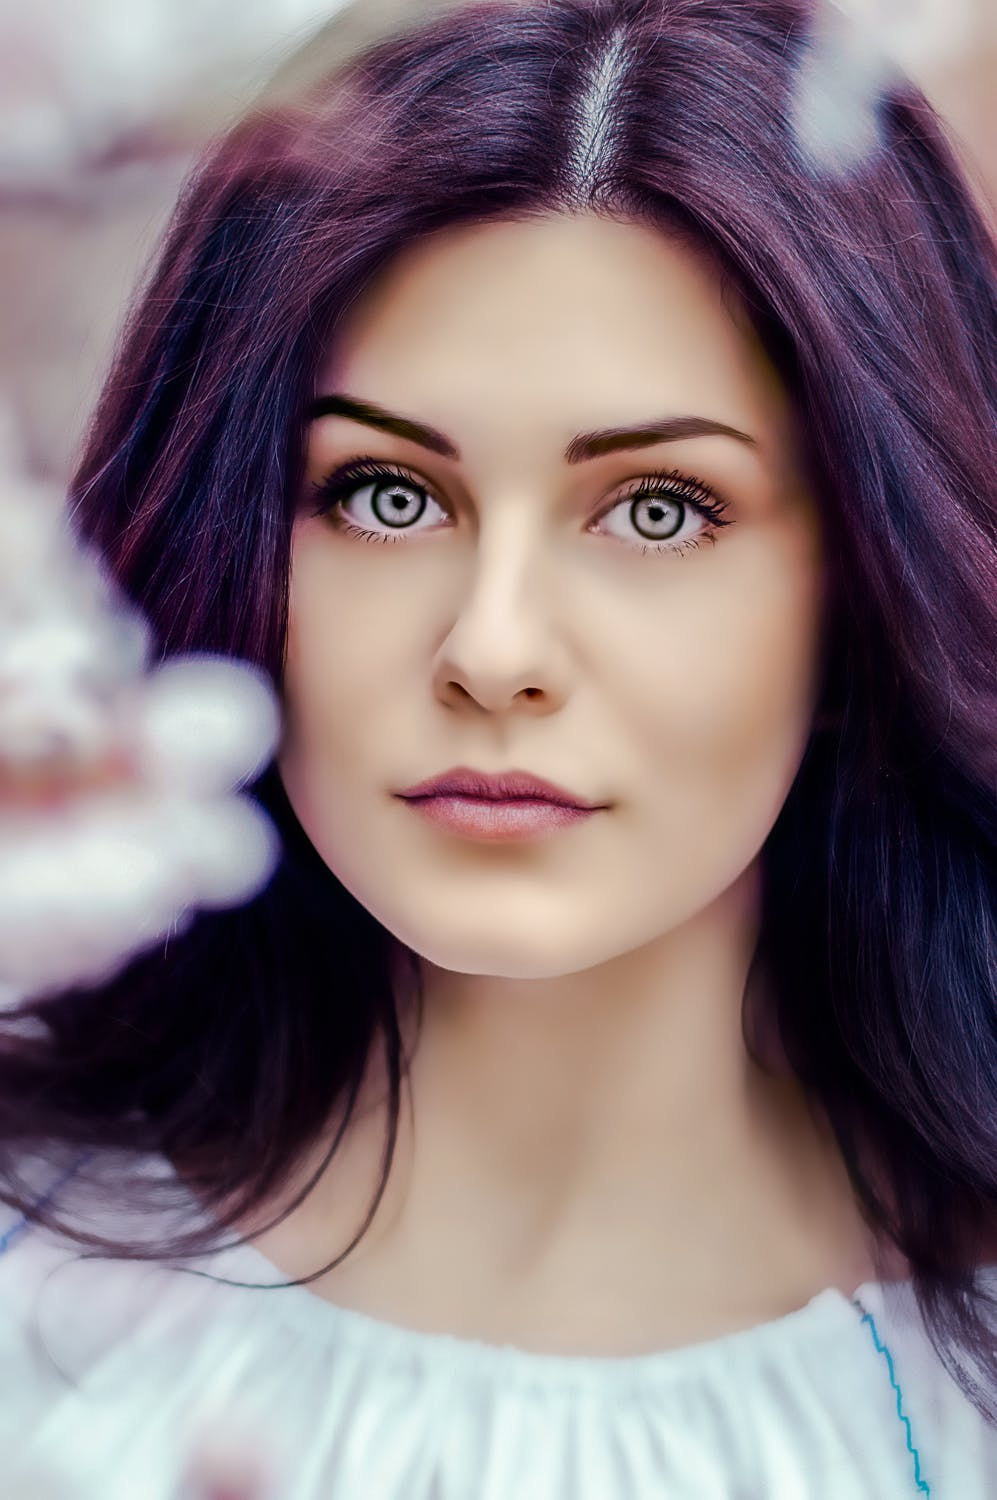 headshot of woman with purple hair